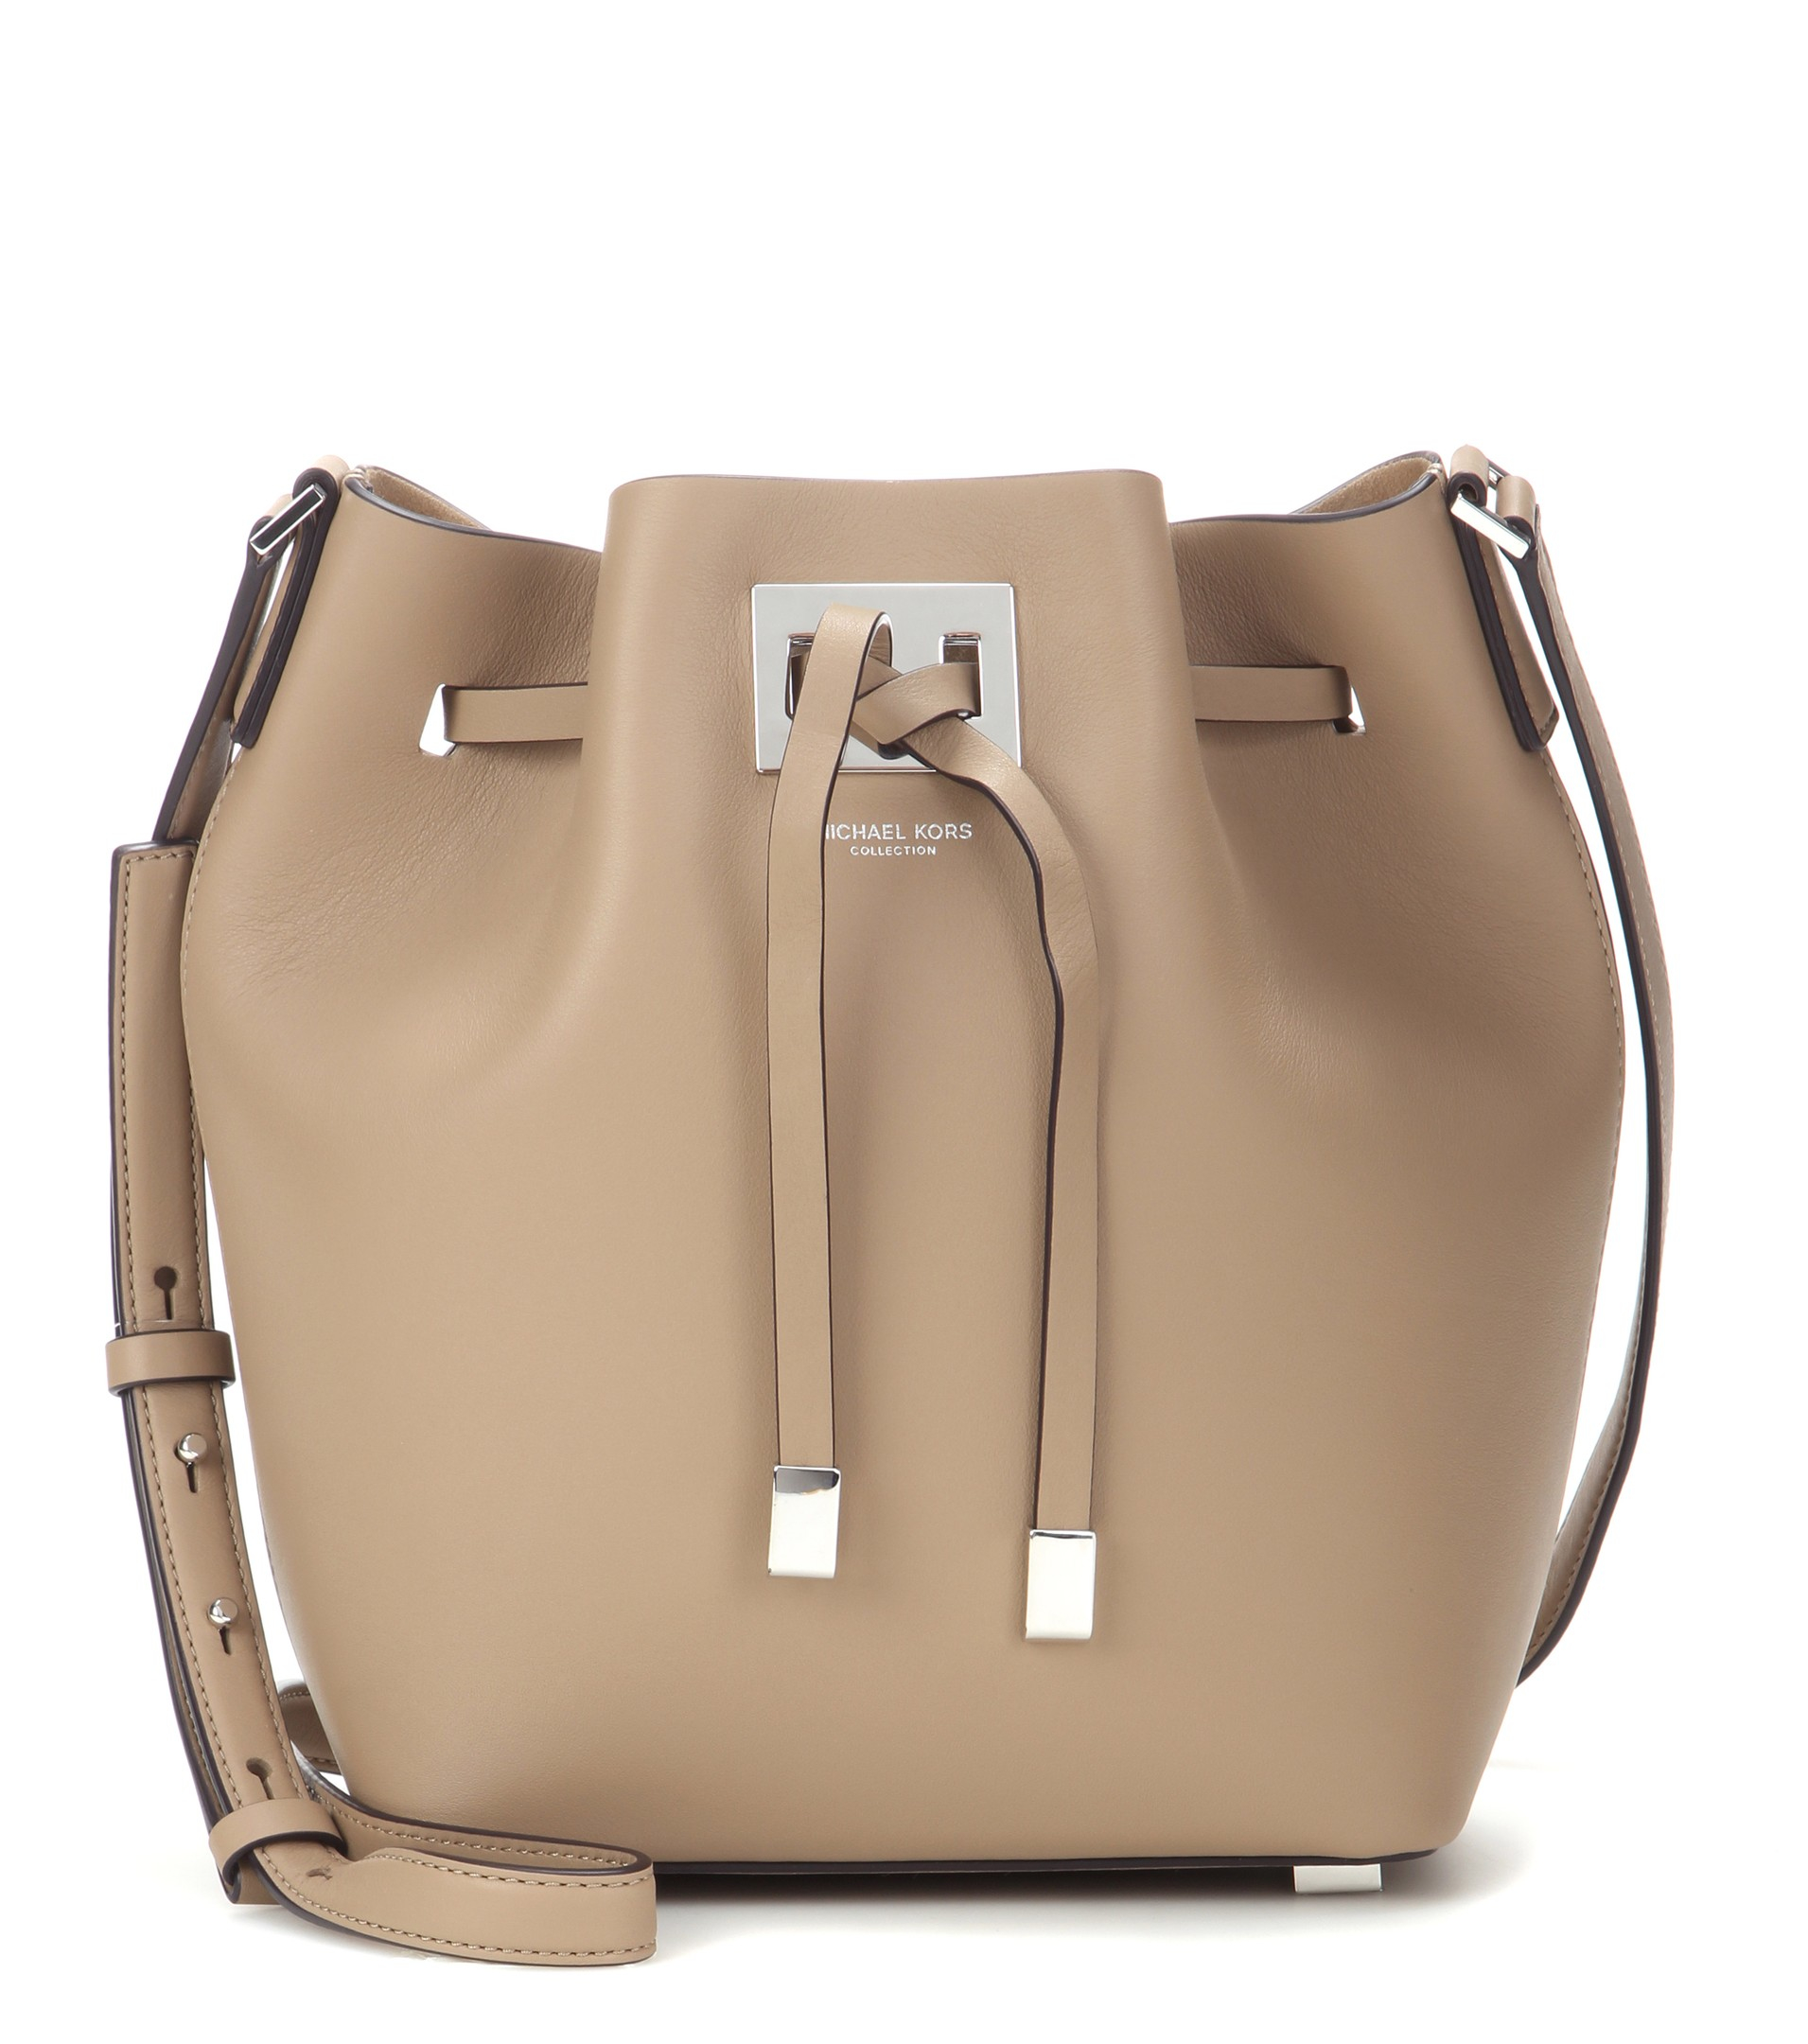 Michael Kors Miranda Small Leather Bucket Bag in Brown - Lyst